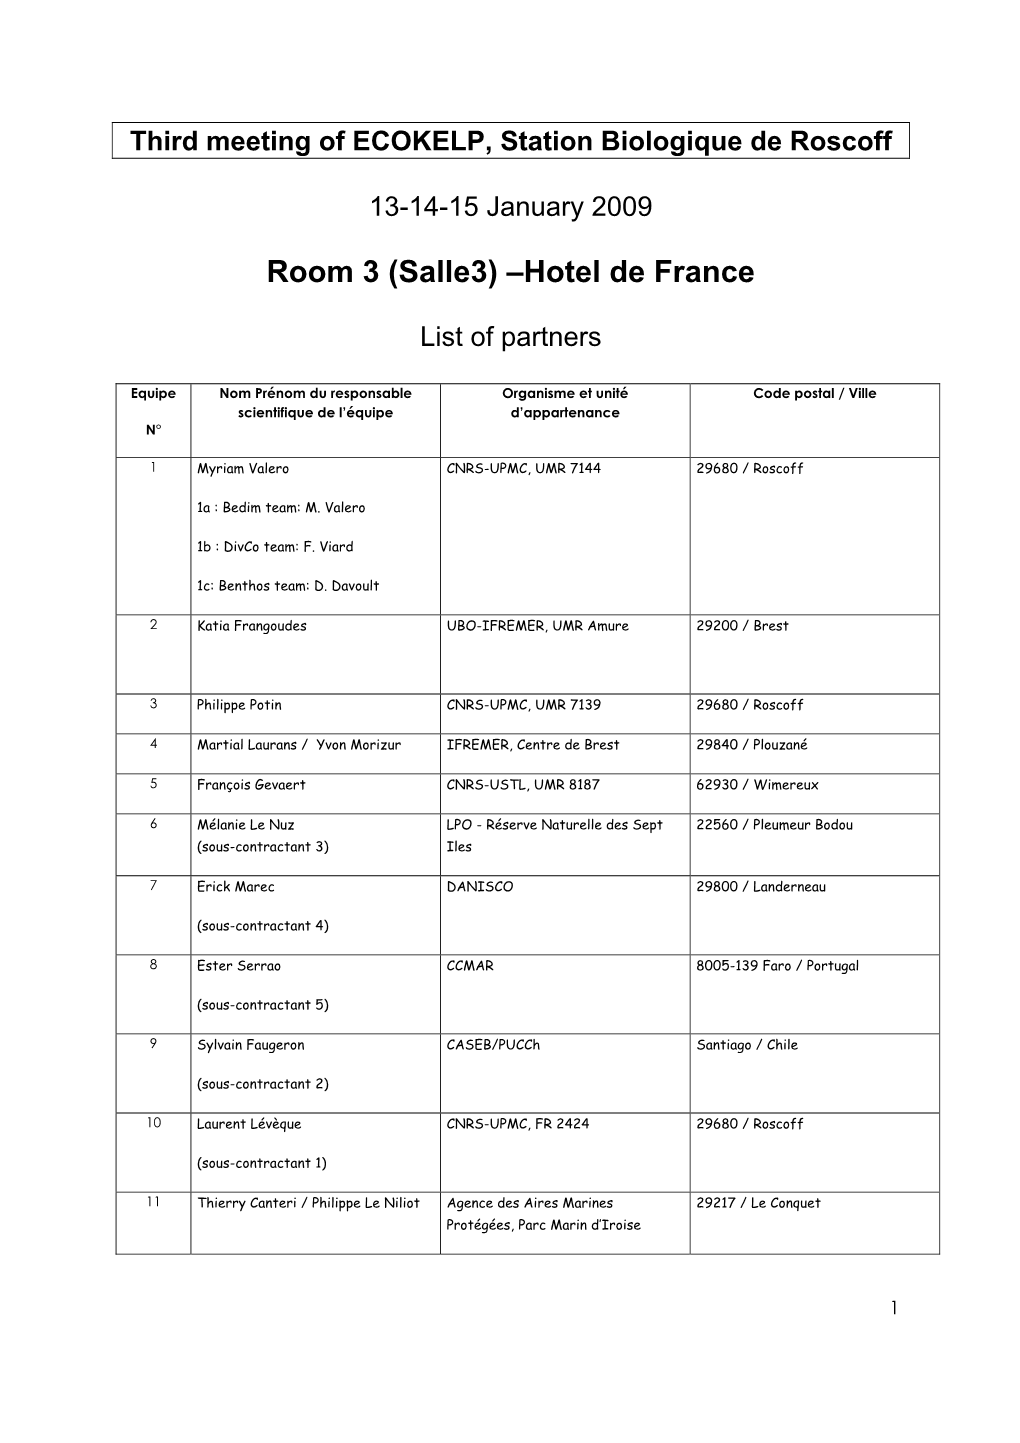 Room 3 (Salle3) –Hotel De France